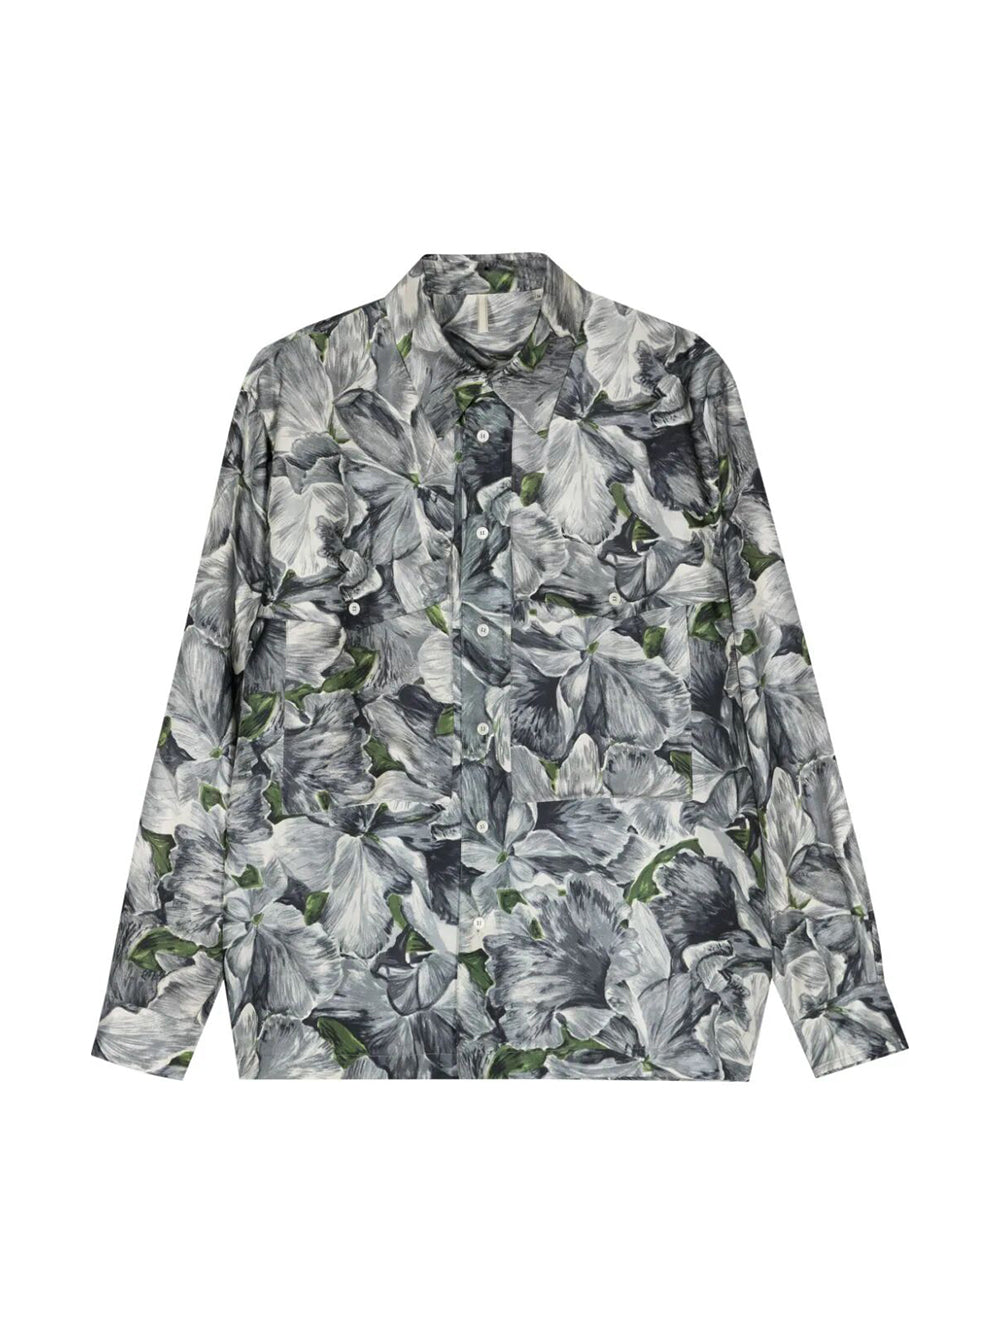 Silk floral printed shirt